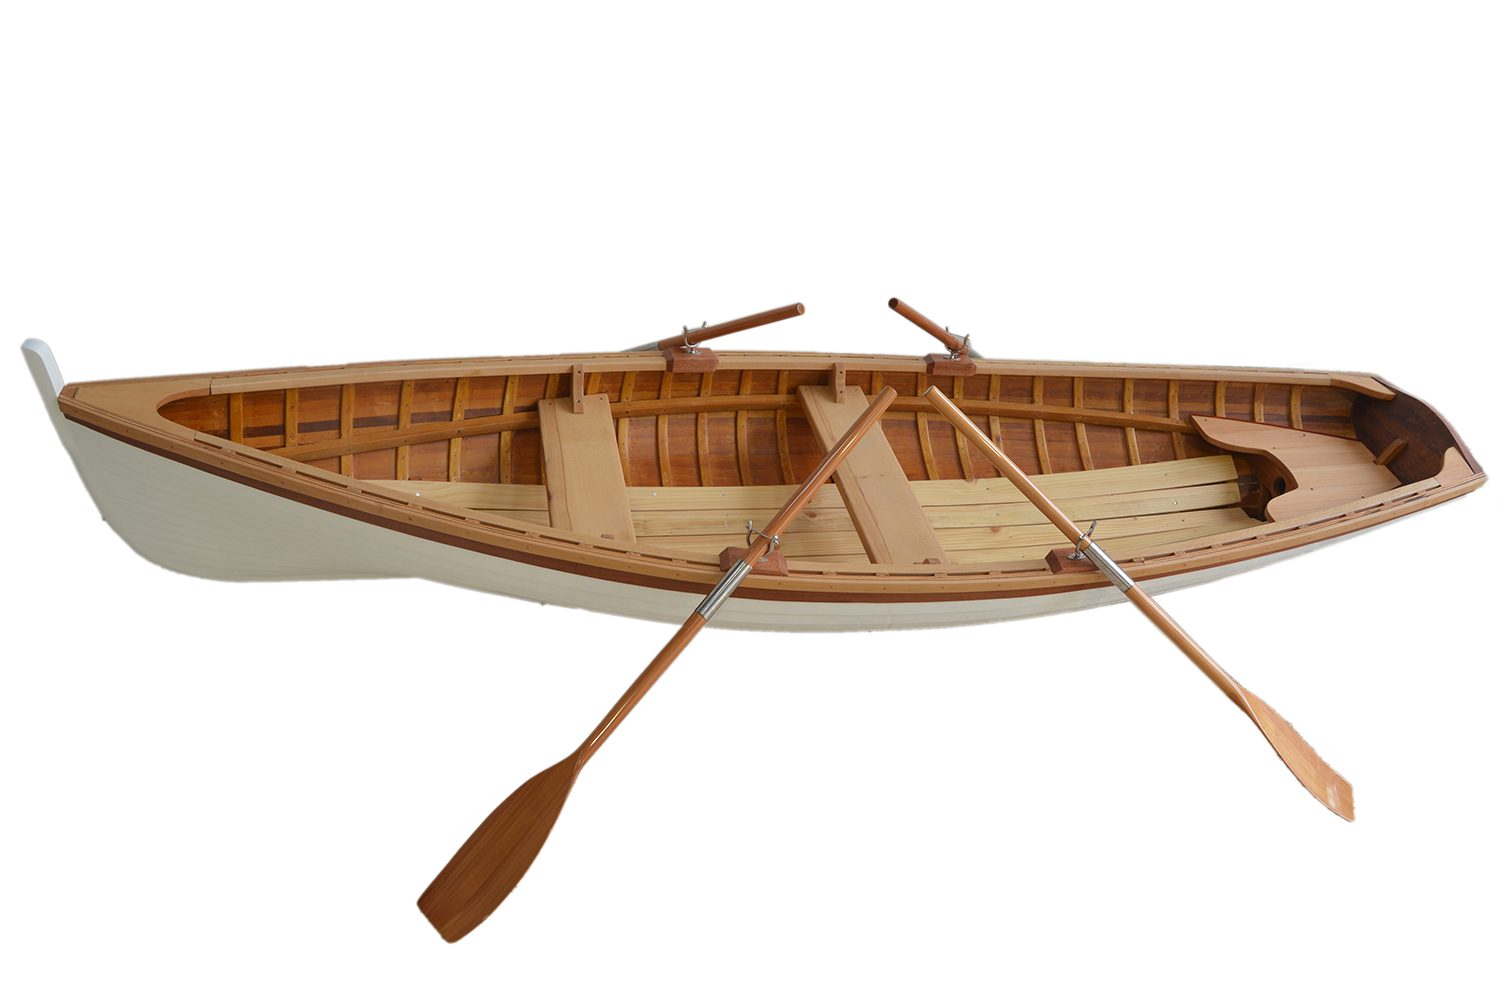 Buy clinker built Whitehall row boat 12 feet - Wooden Boat USA